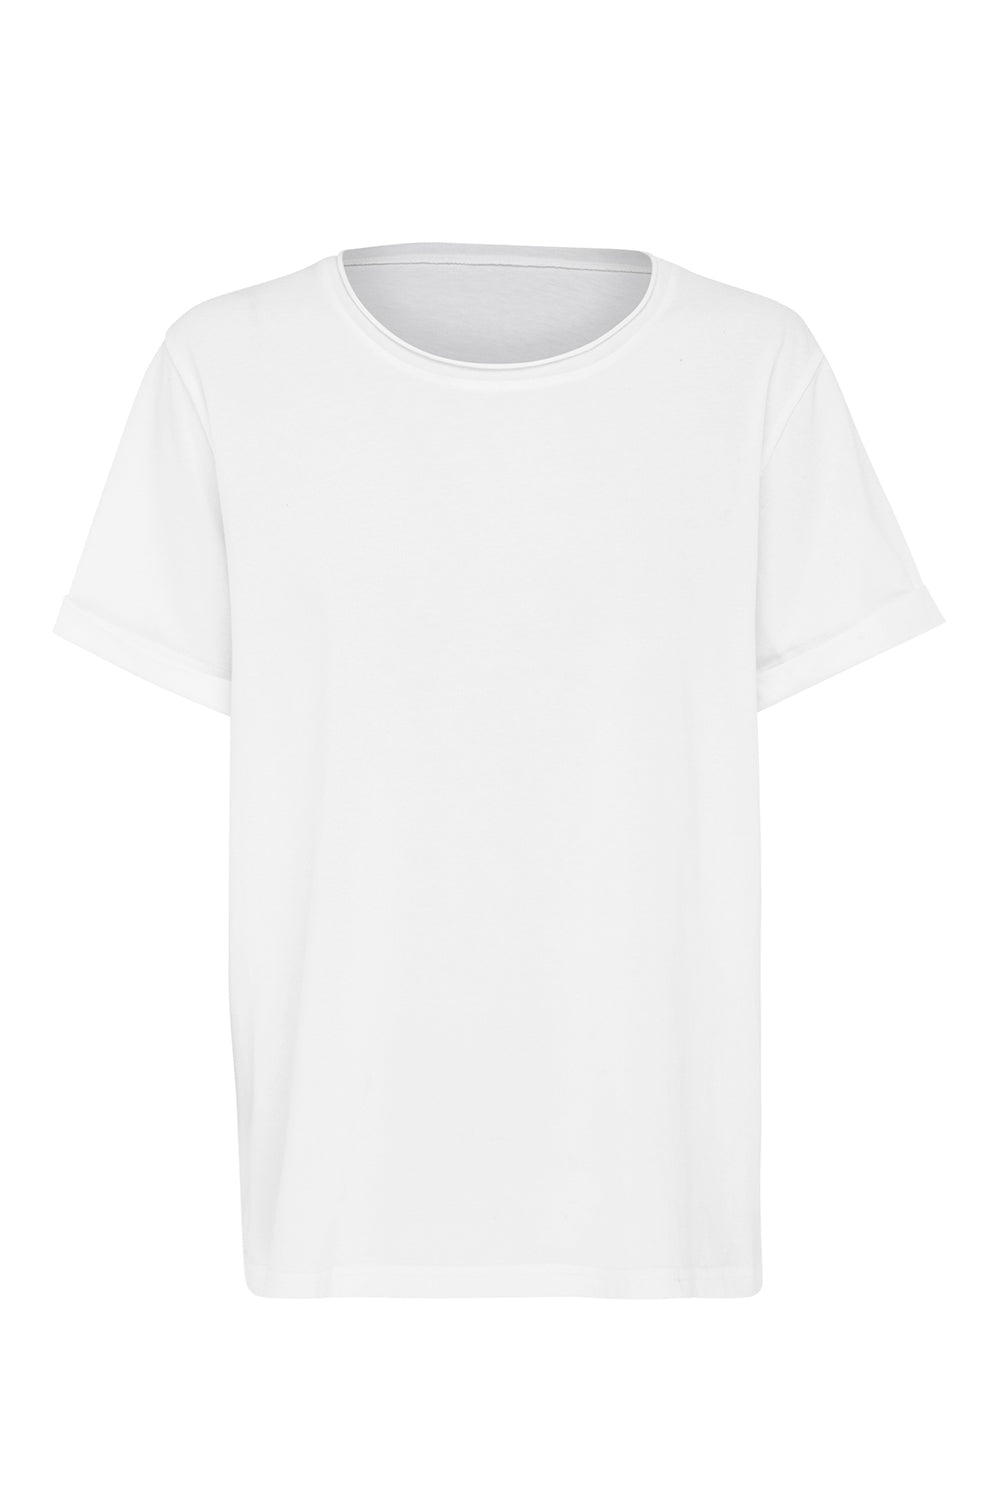 Simple monogrammed white T Shirt